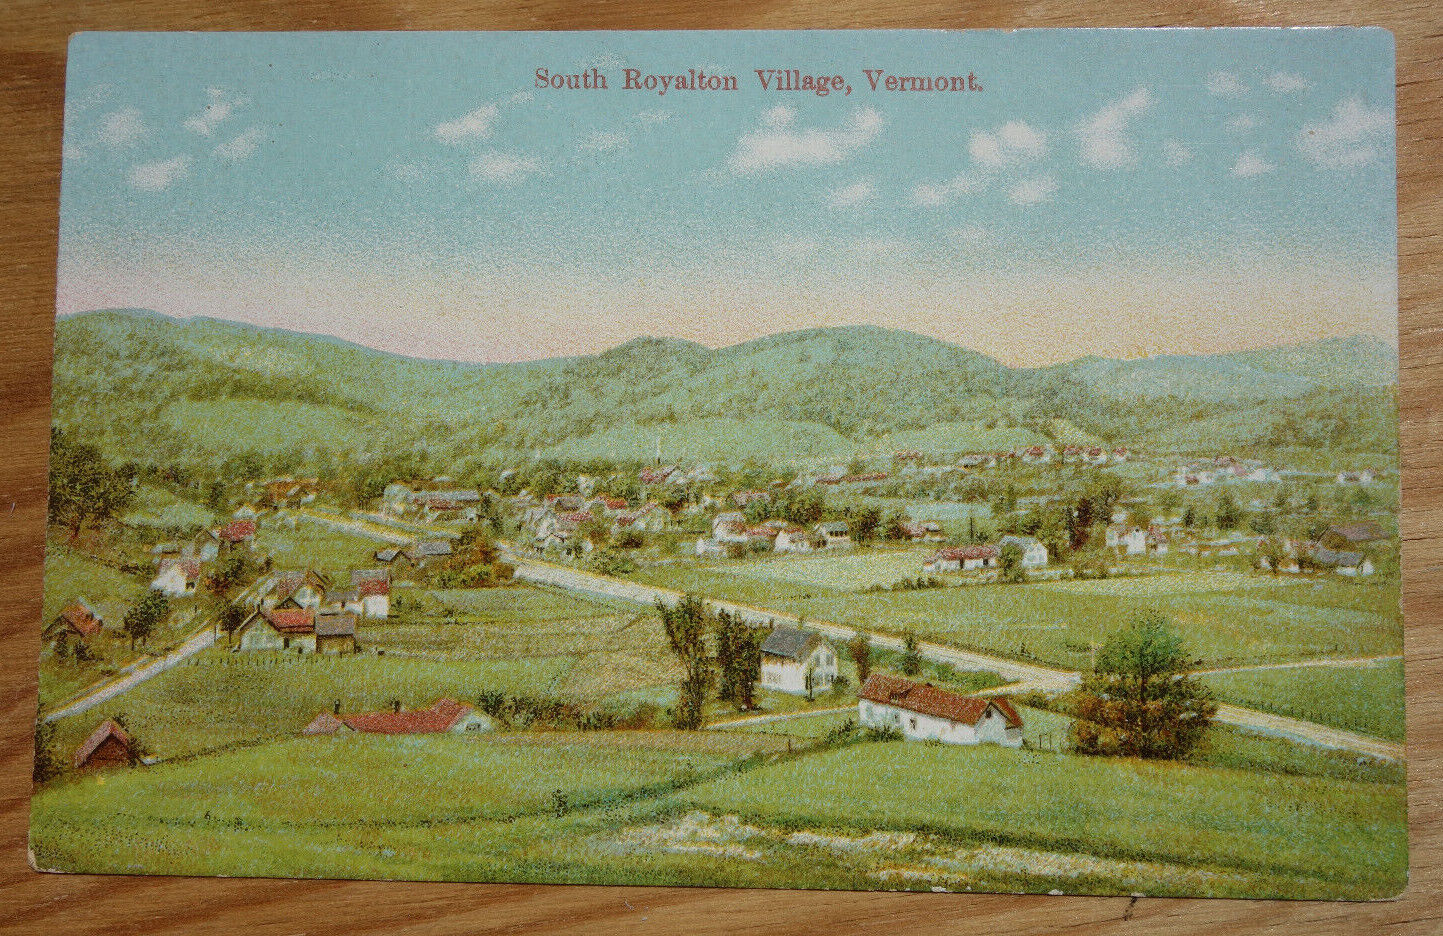 South Royalton Village, VT postcard birthplace of Joseph Smith, LDS Prophet